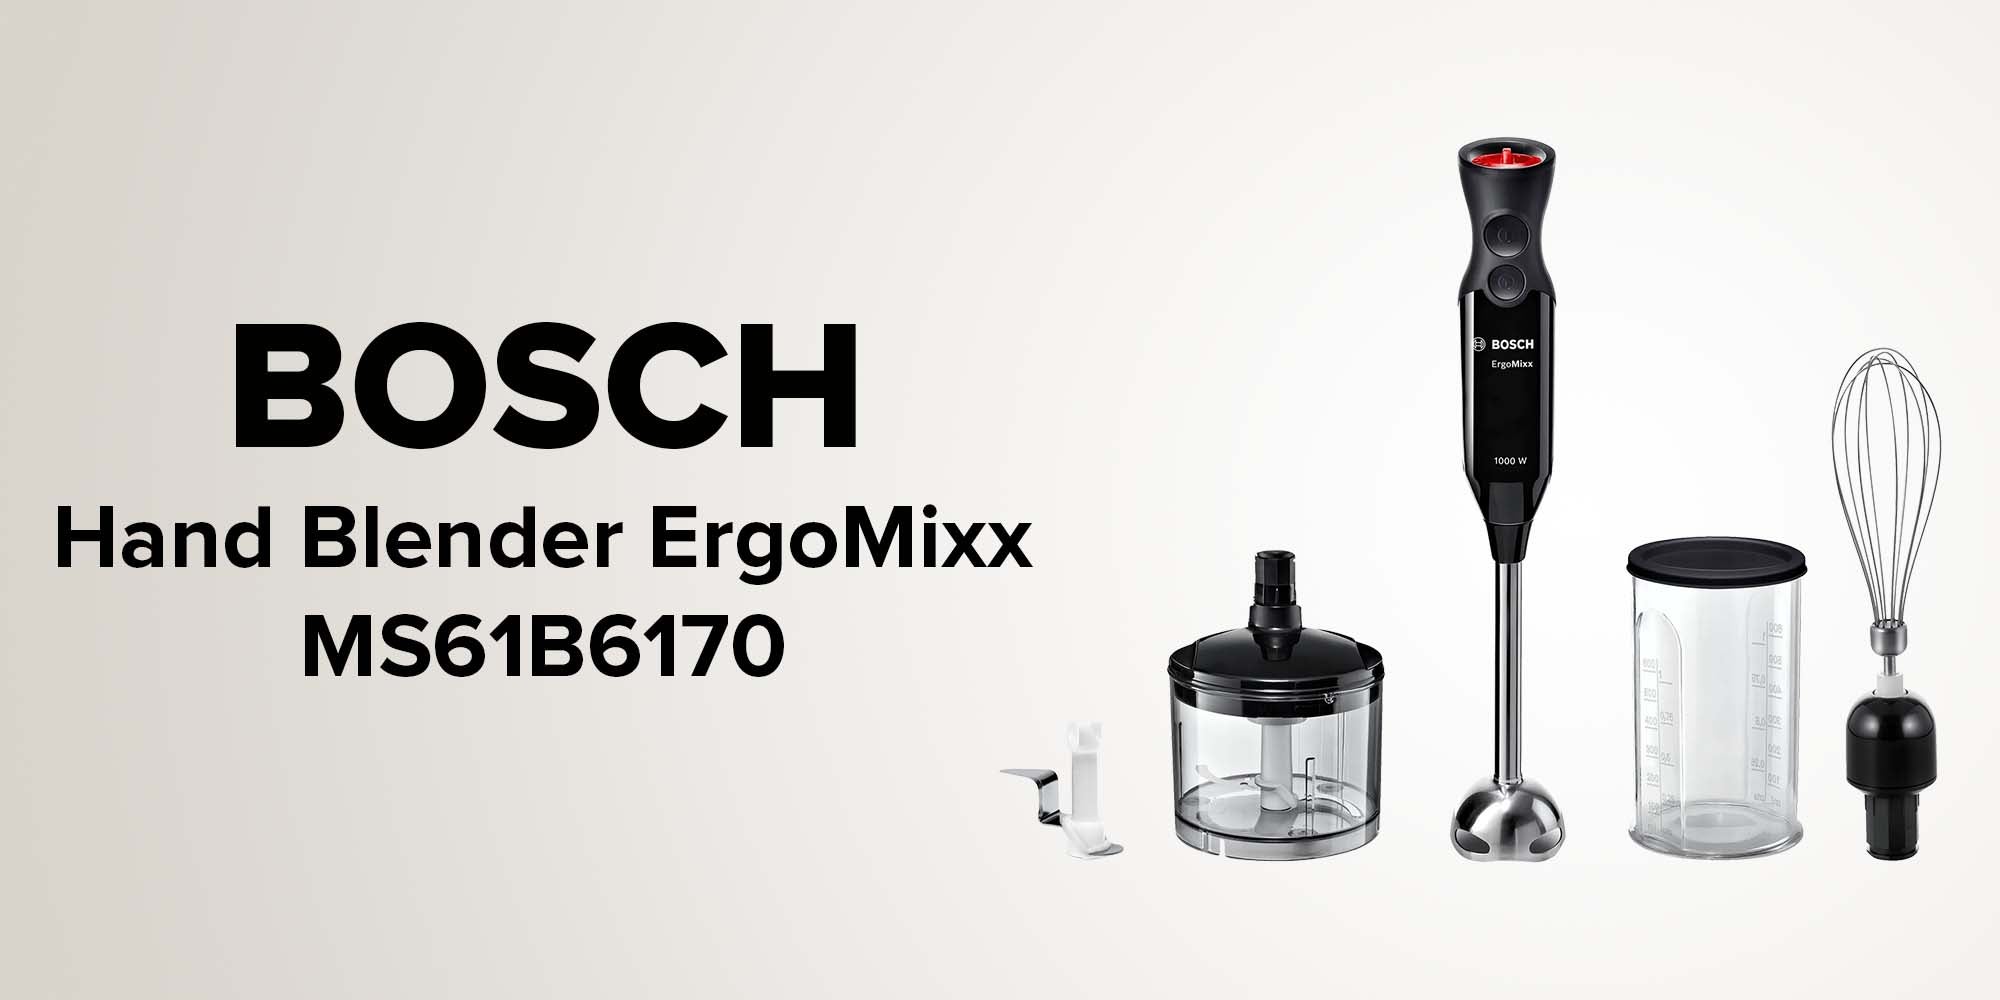 Bosch Mixeur plongeurs ErgoMixx 1000 W anthracite Réf MS61B6170 